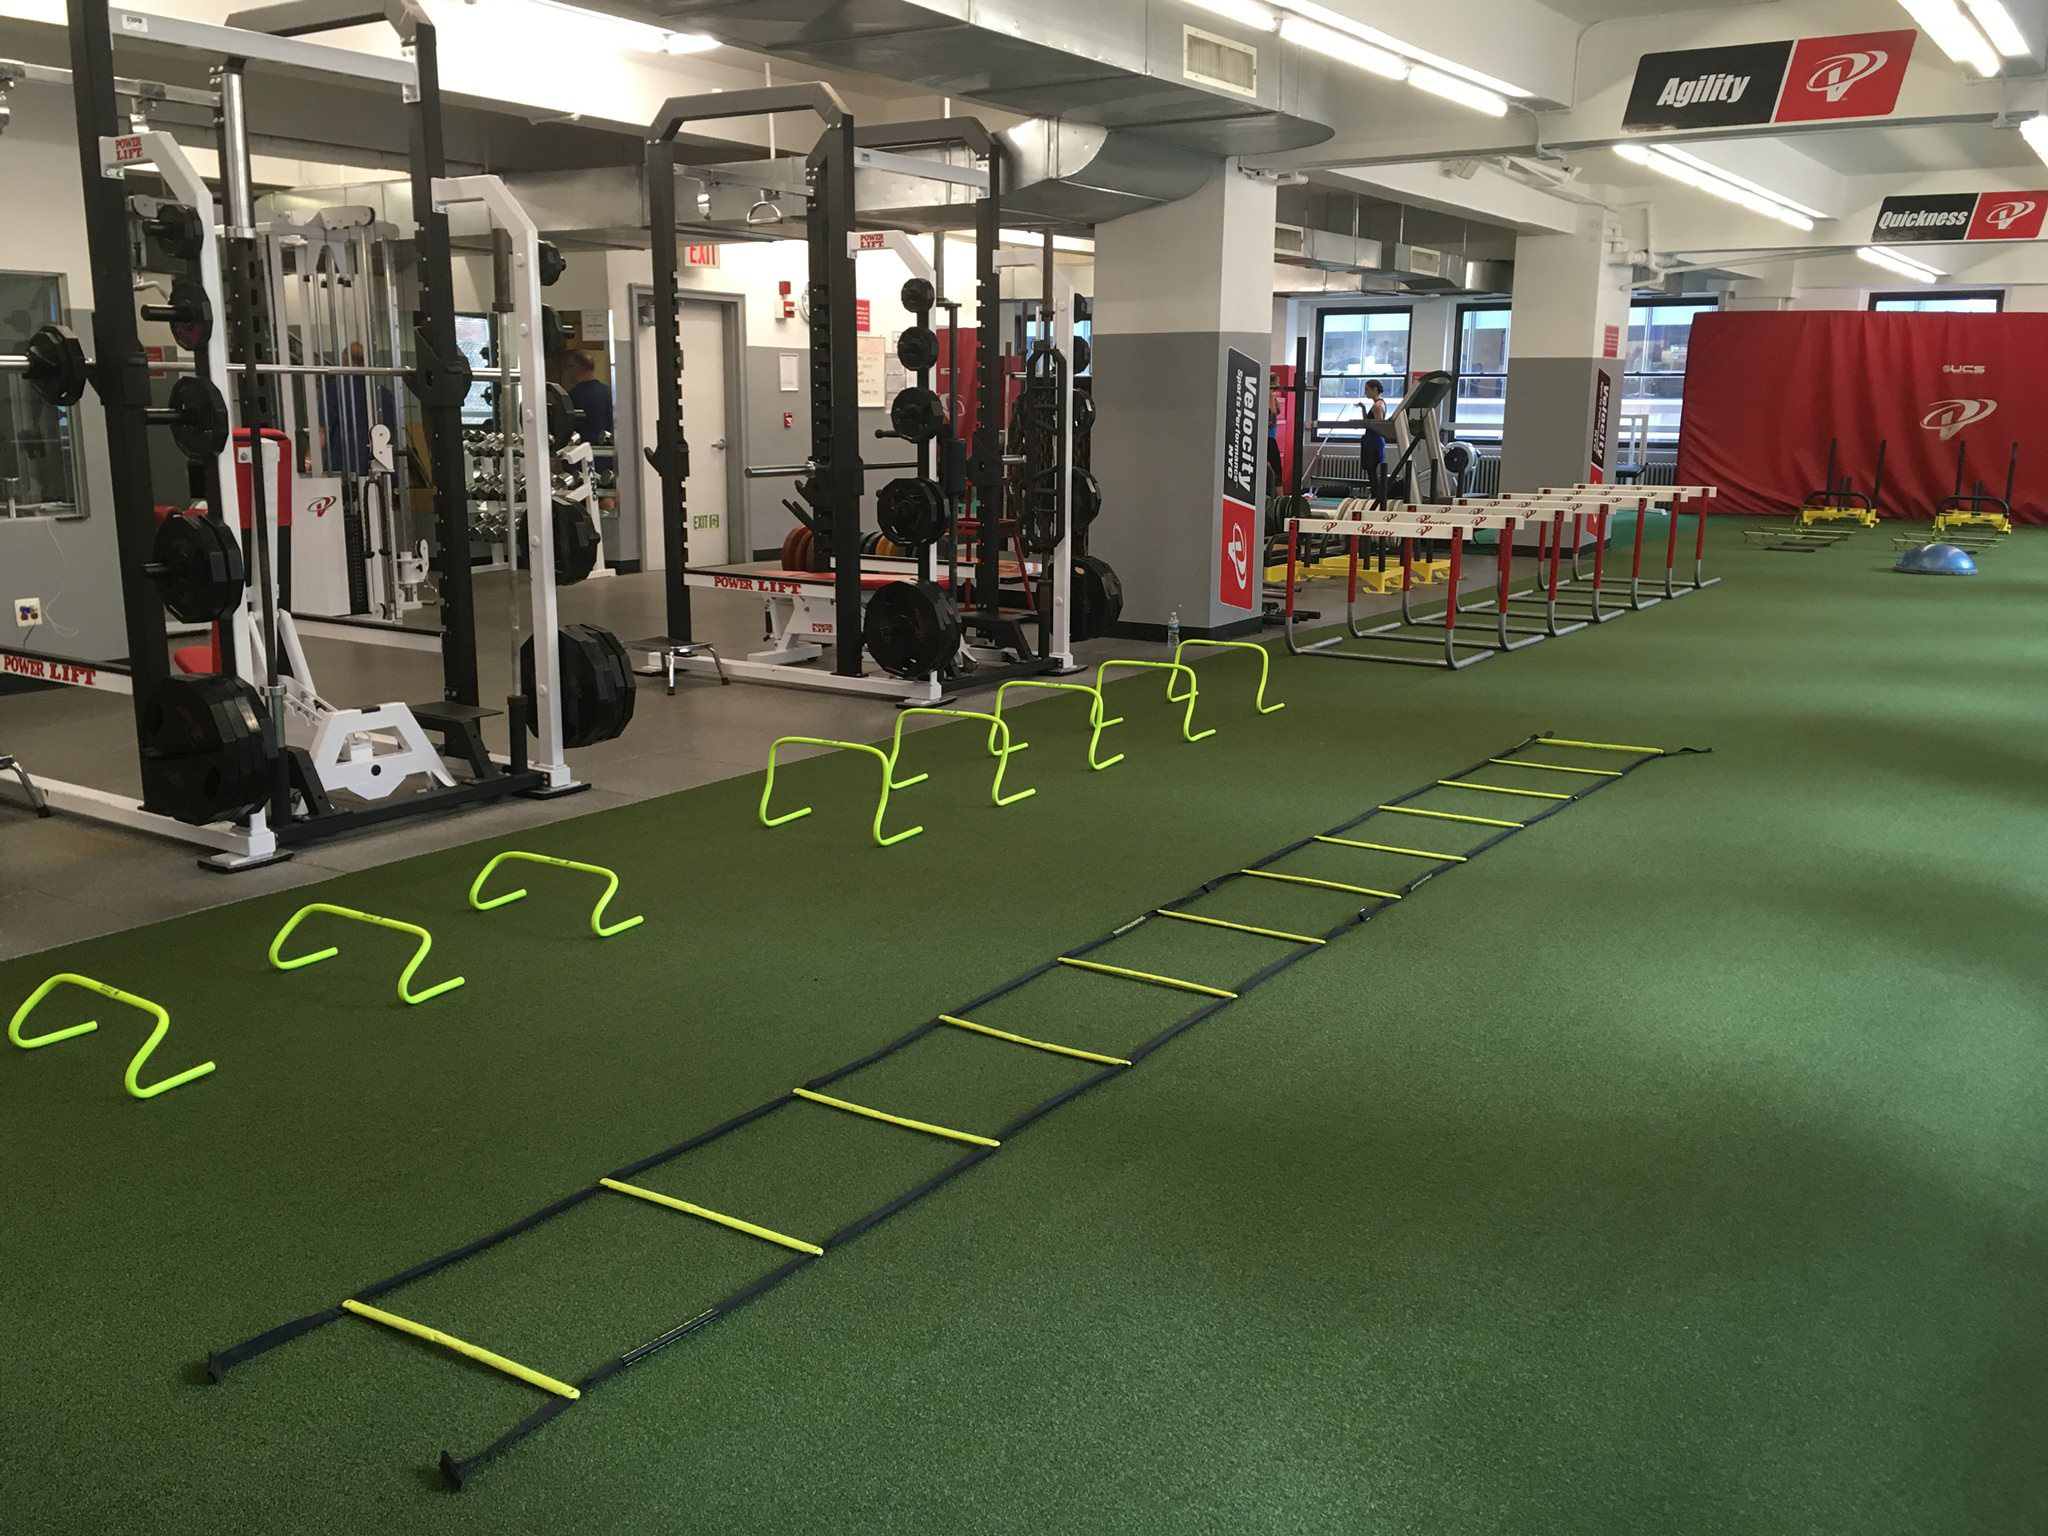 Sutton Carpet NYC gym turf flooring Installation for Velocity Sports Performance